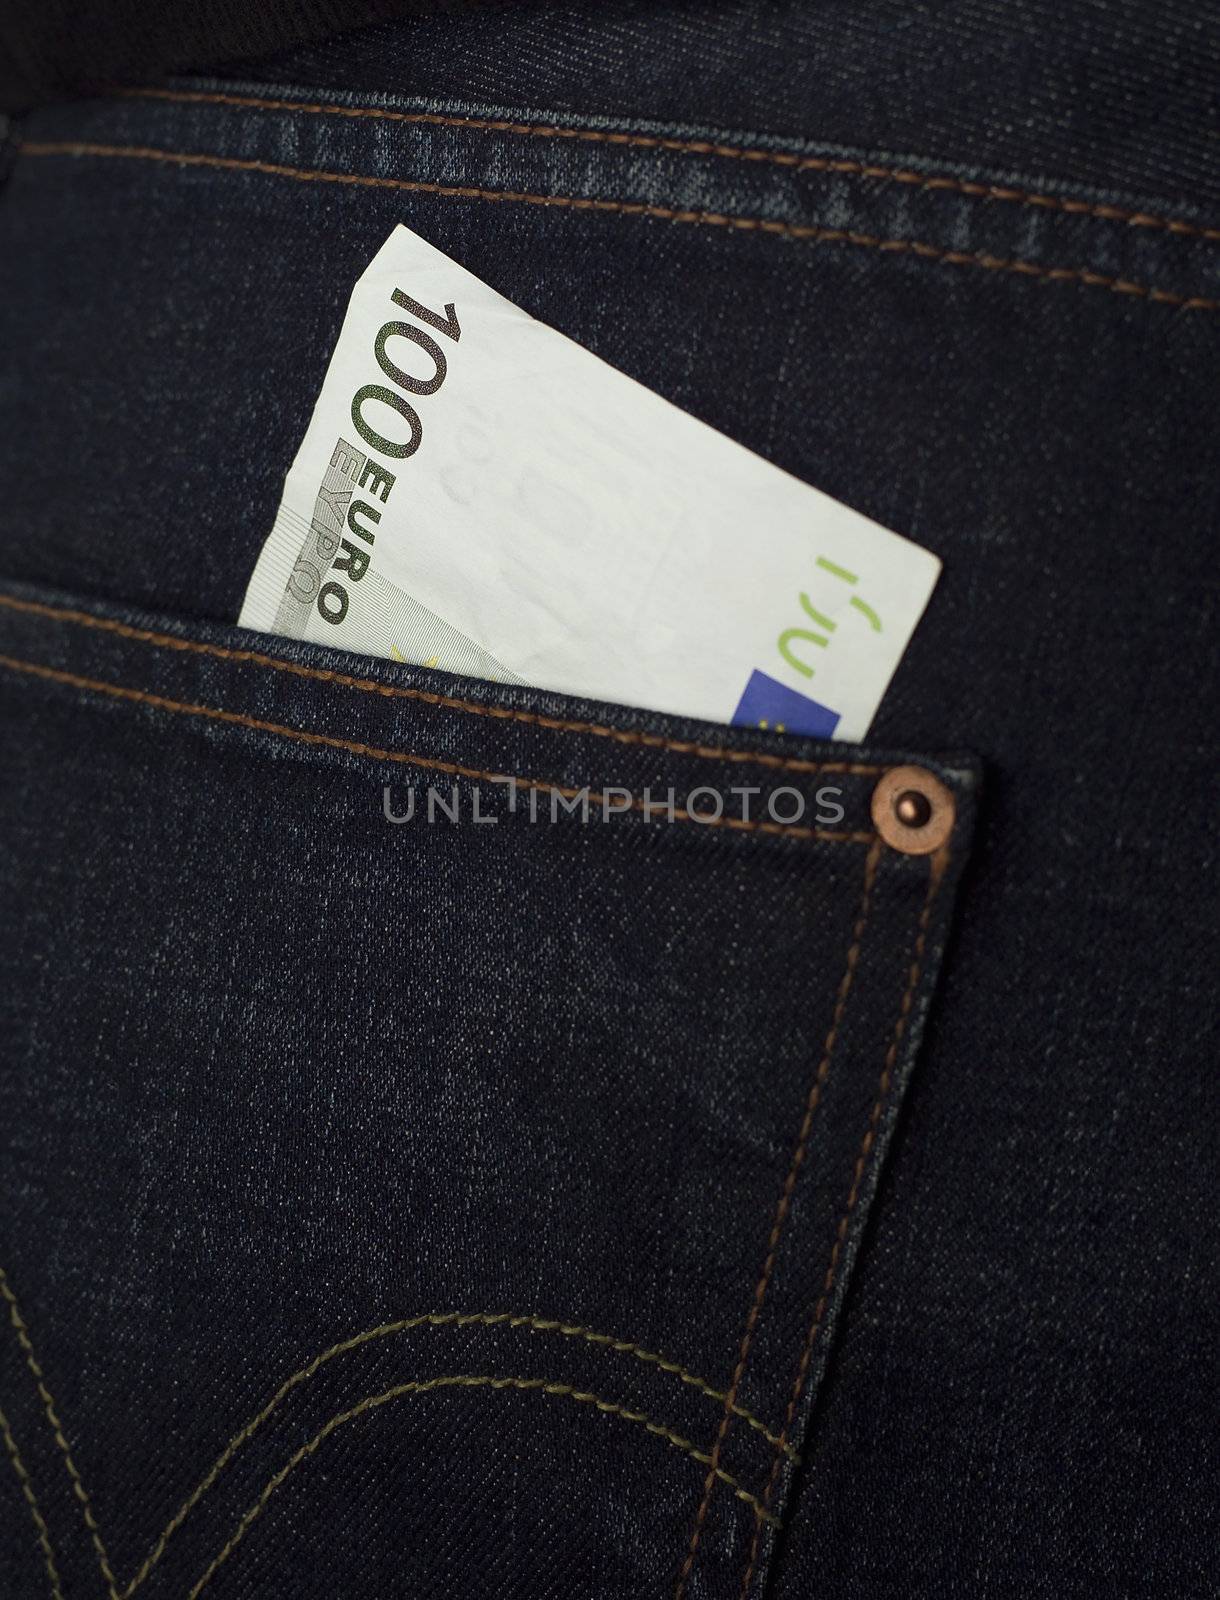 Money in pocket by gemenacom